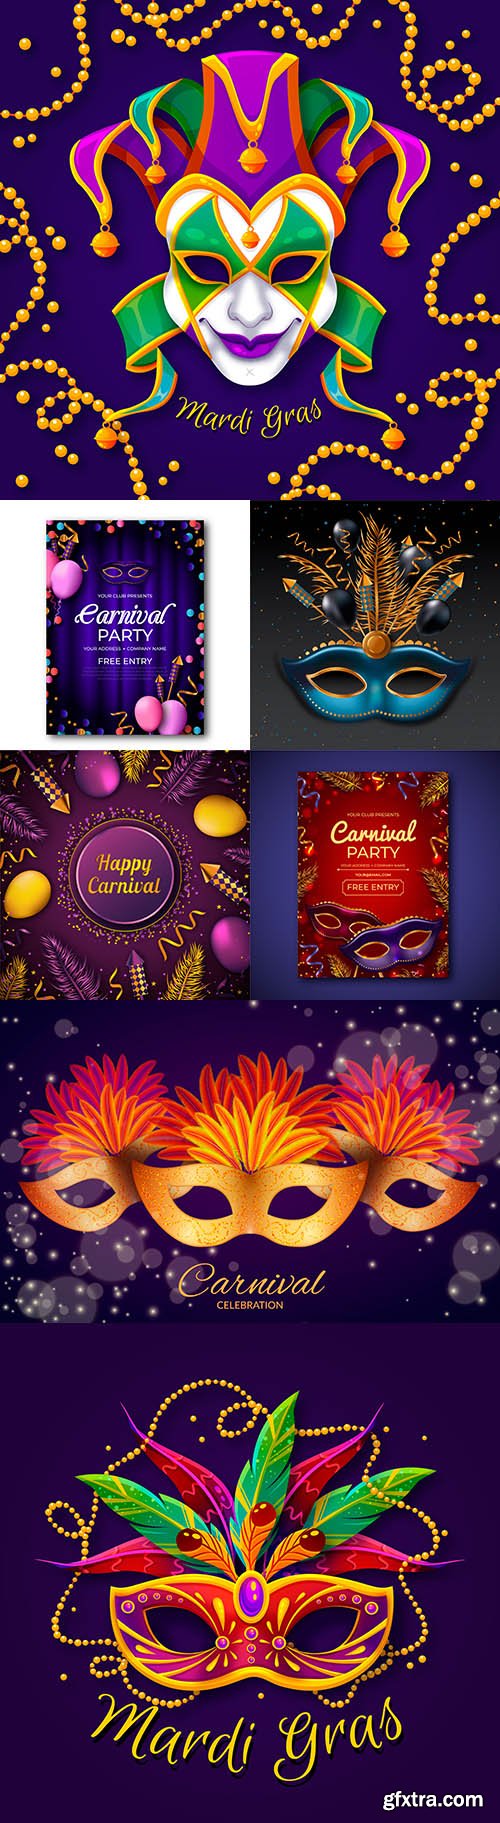 Mask Mardi gras design carnival party 3d illustrations 2